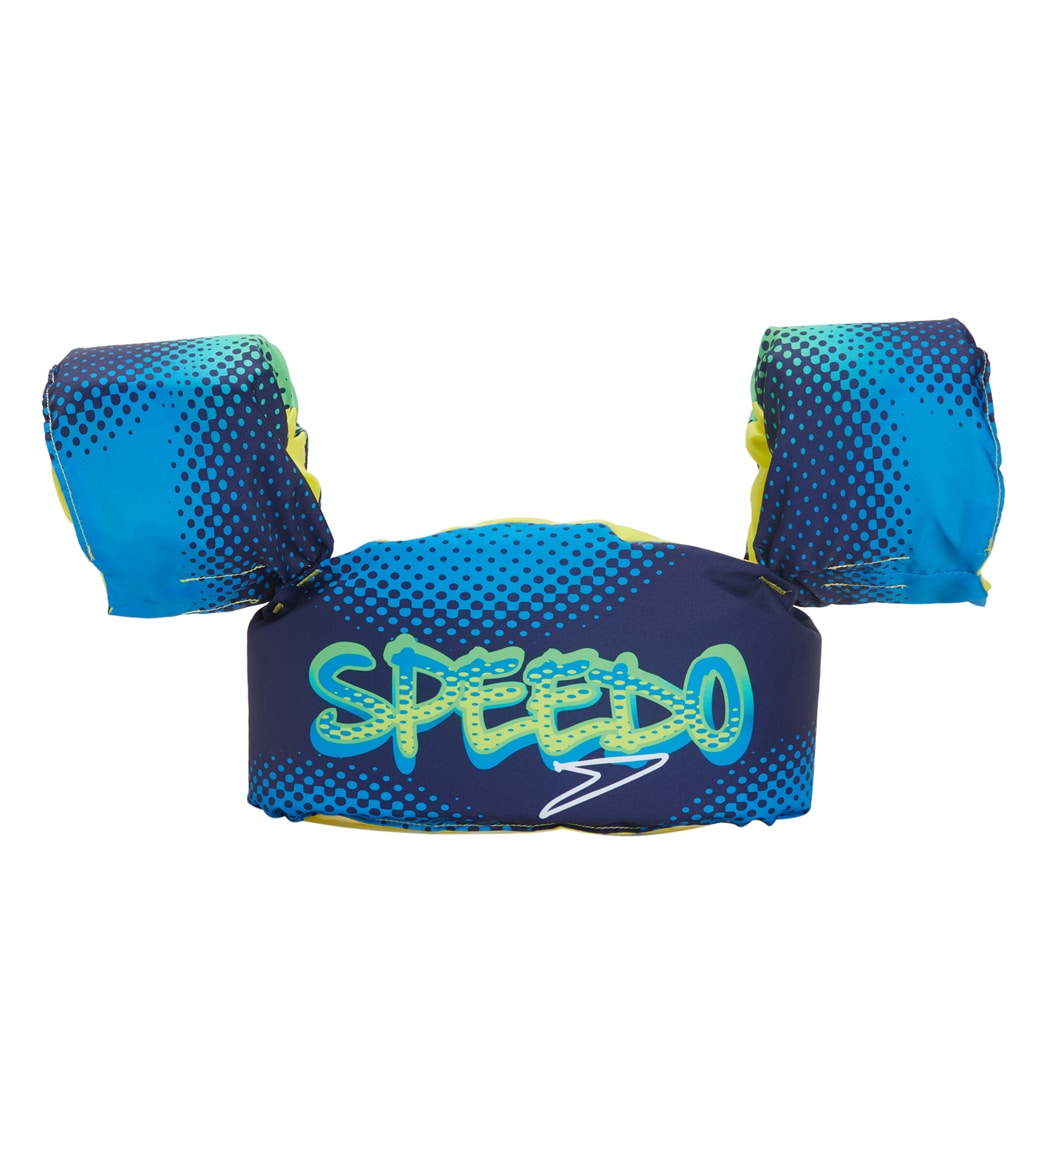 Speedo Kids Swim Star Flotation Device - Peacoat/Blue Digi Spots - Swimoutlet.com